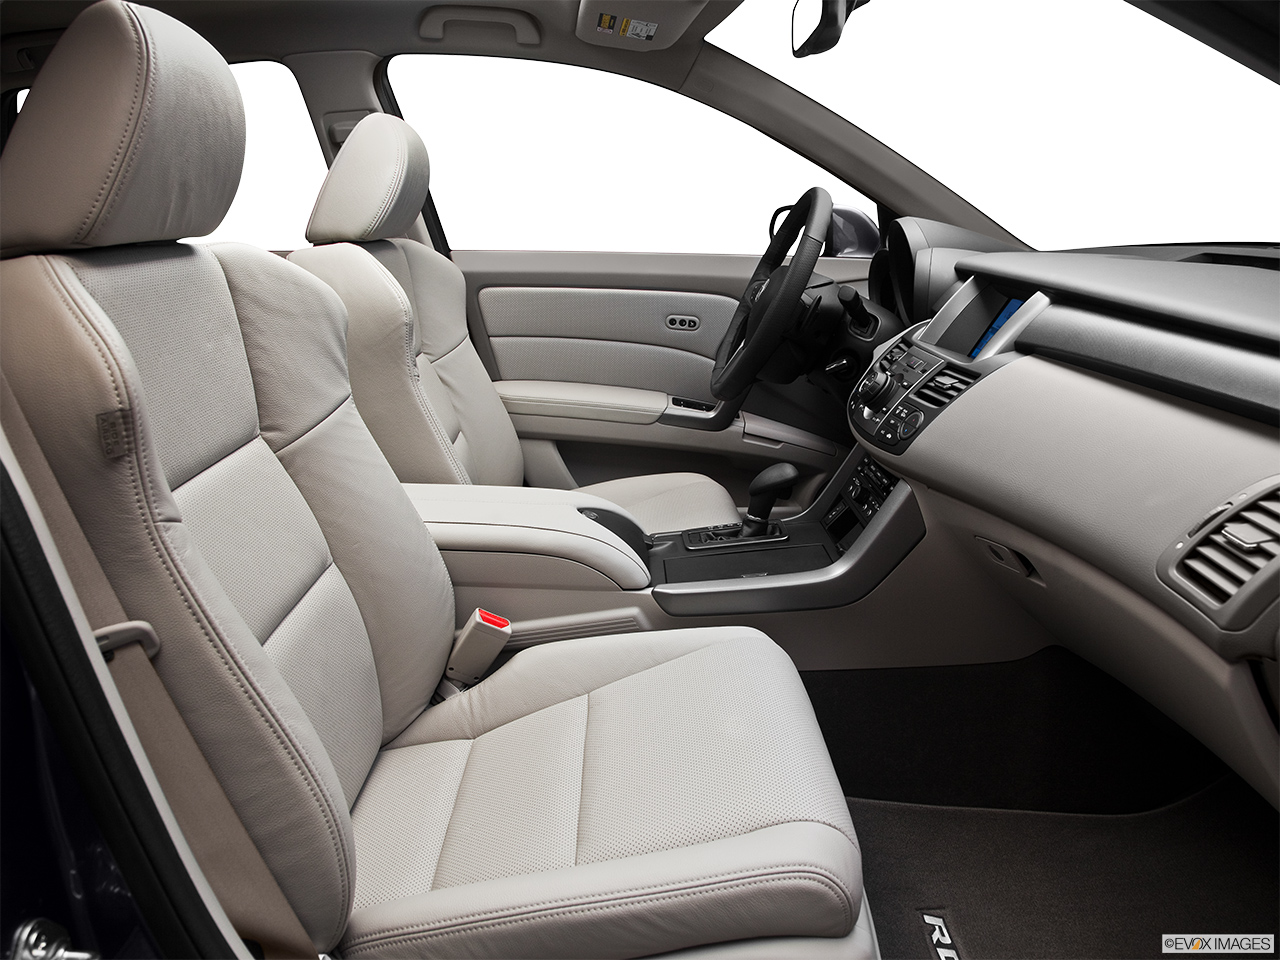 2012 Acura RDX RDX Passenger seat. 